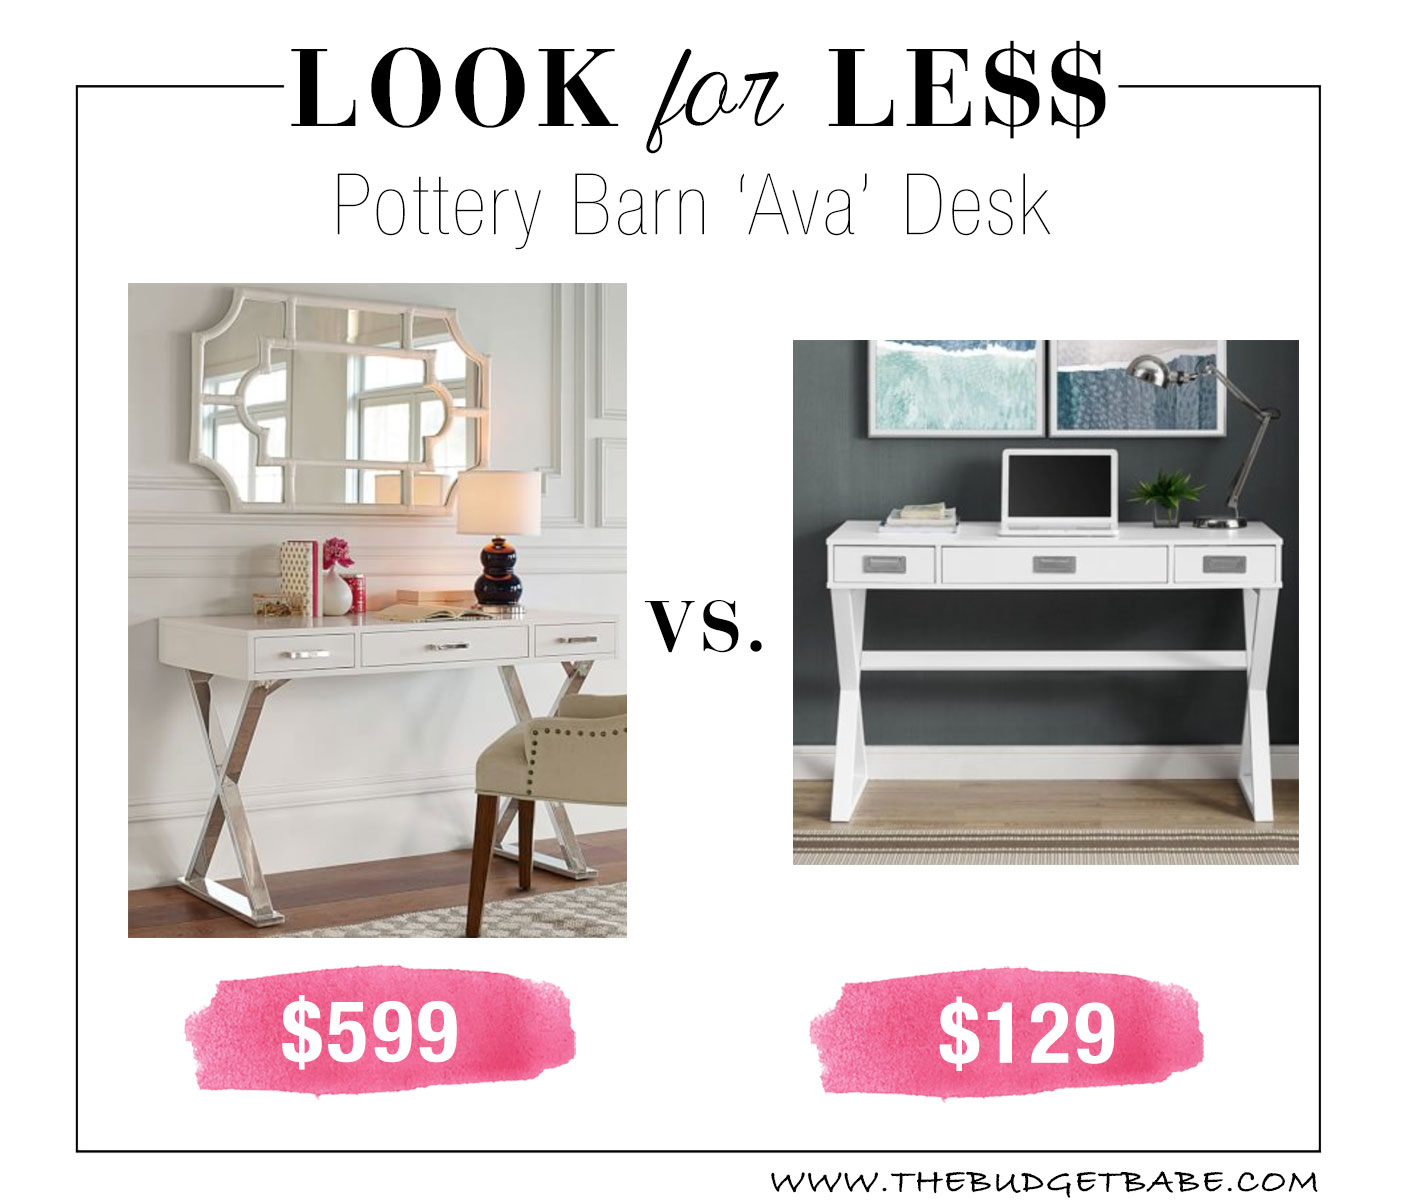 Pottery Barn 'Ava' Desk Lookalike at Walmart!